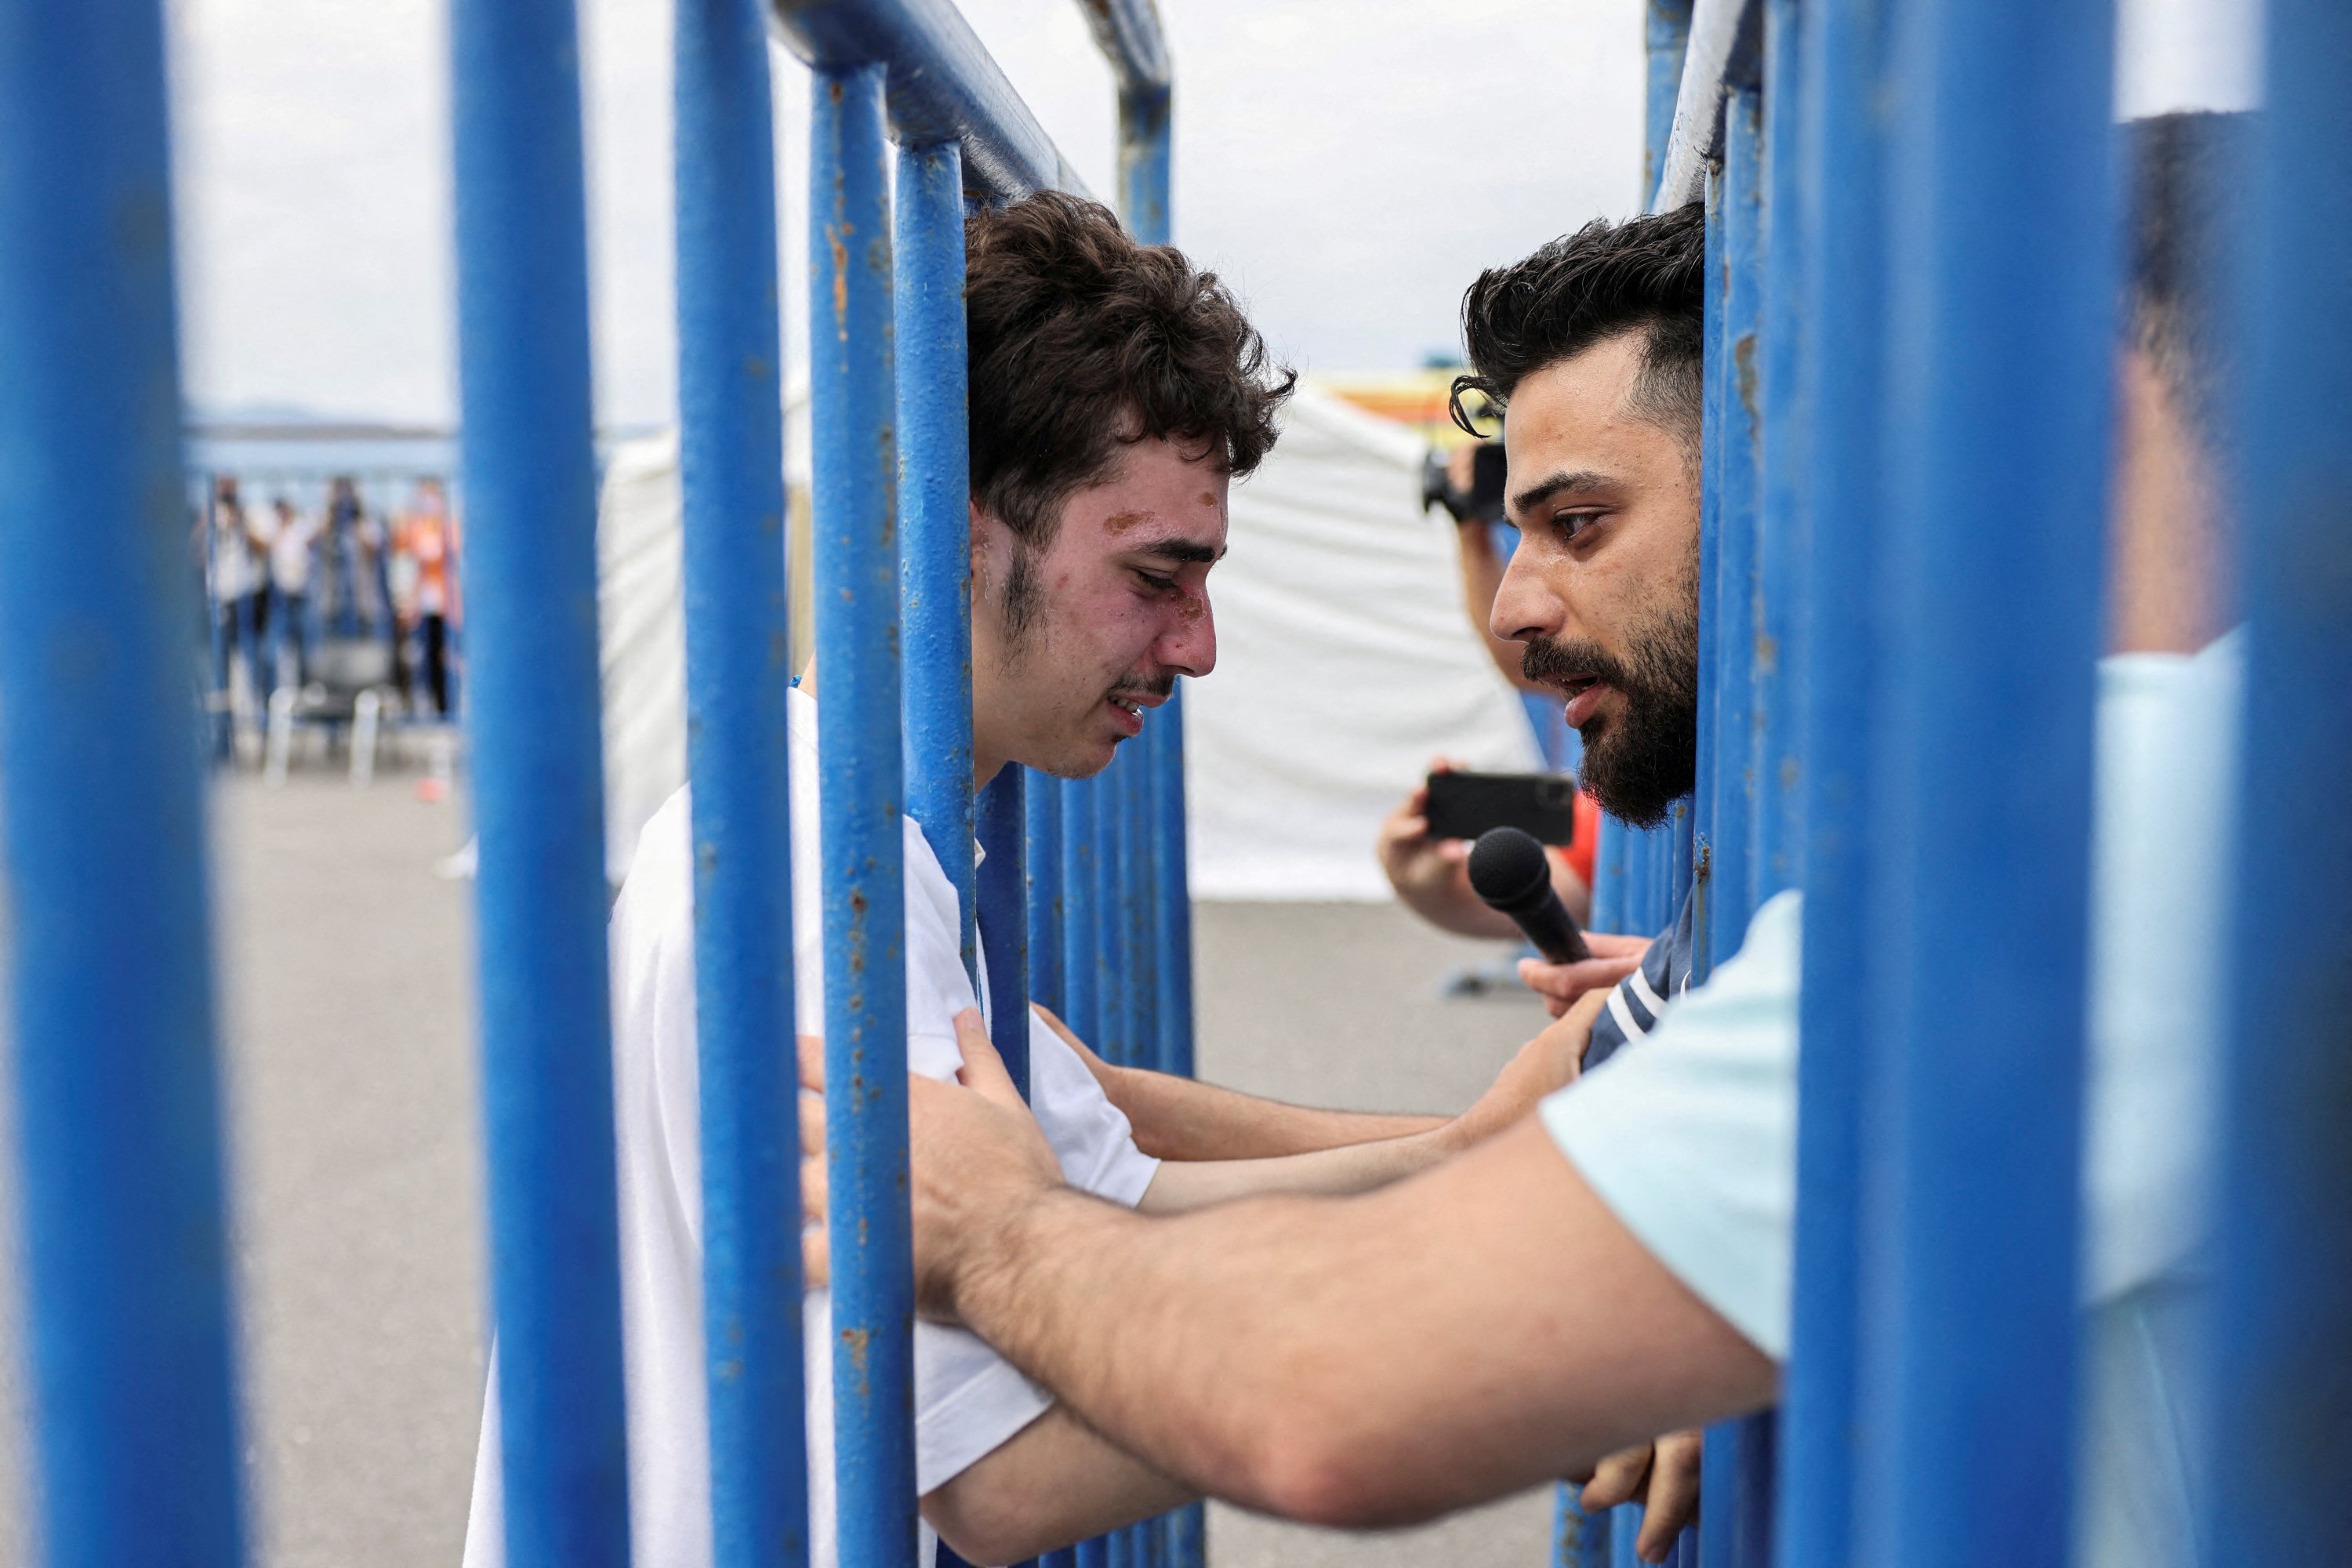 Mohammad, 18, penyintas Suriah, yang diselamatkan bersama pengungsi dan migran lain di laut lepas lepas pantai Yunani setelah kapal mereka terbalik, menangis saat bertemu kembali dengan saudaranya Fadi, yang datang menemuinya dari Belanda, di pelabuhan Kalamata, Yunani, Juni 16, 2023. (Foto Reuters)